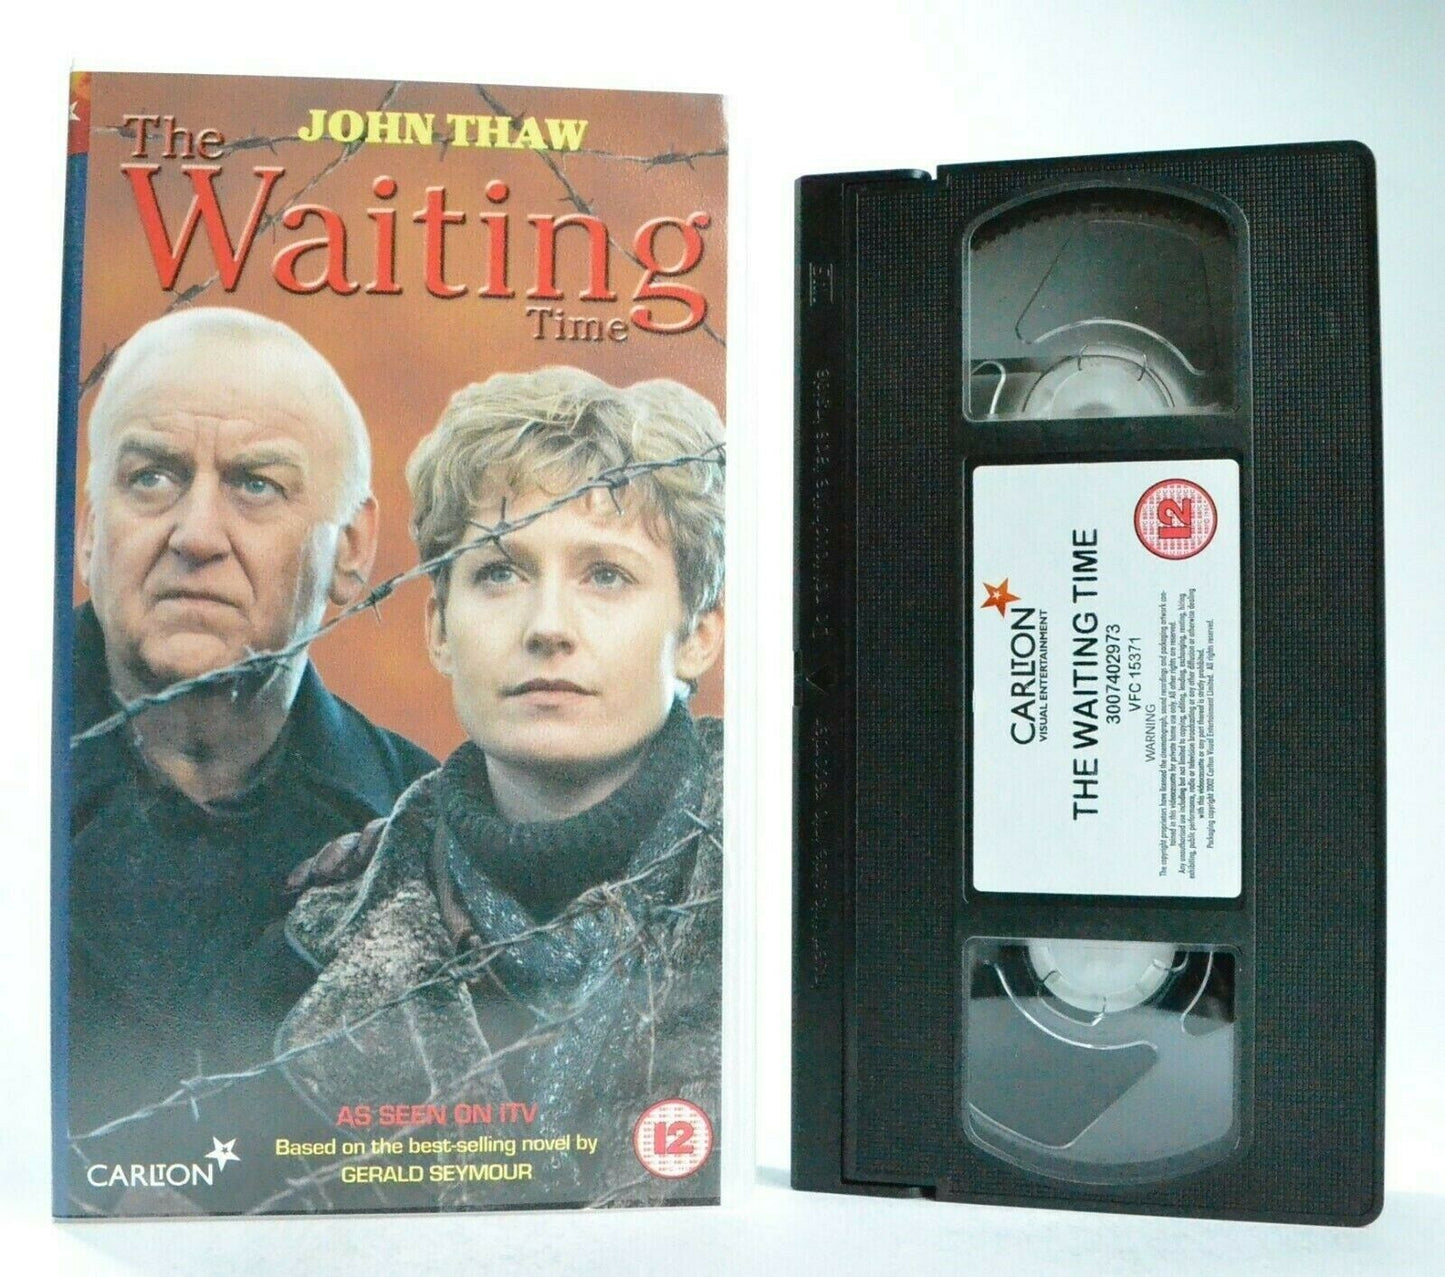 The Waiting Time: Based On G.Seymour Novel - TV Movie - Crime Thriller - Pal VHS-